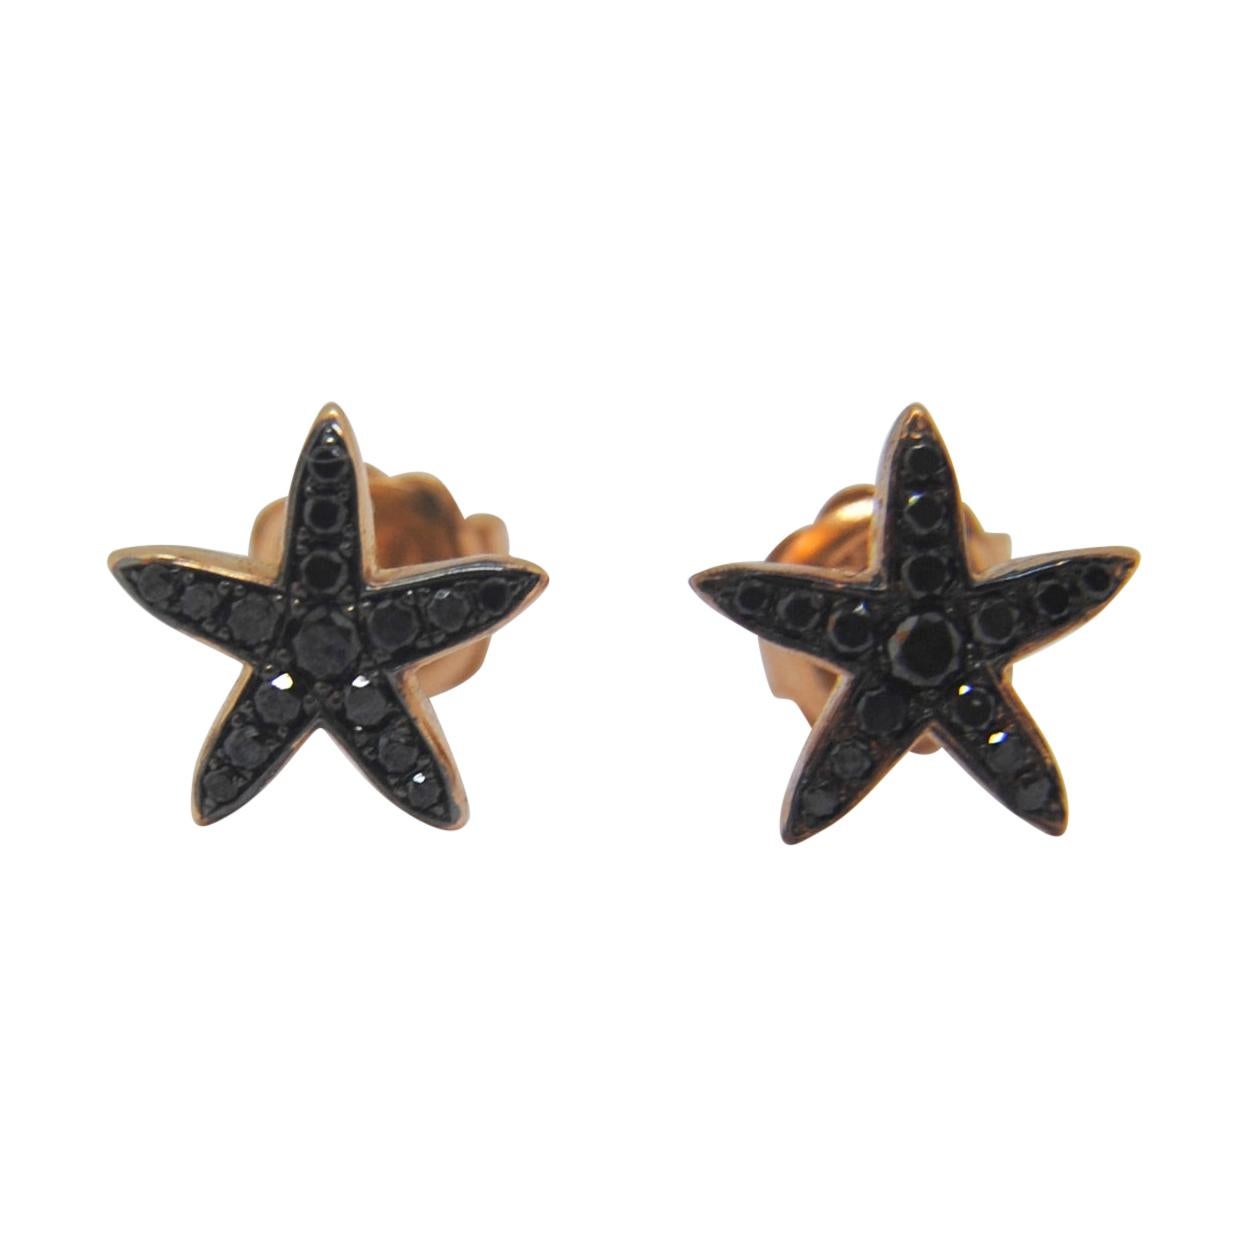 Black Diamond Sea Star Earrings in 18 Karat Rose Gold